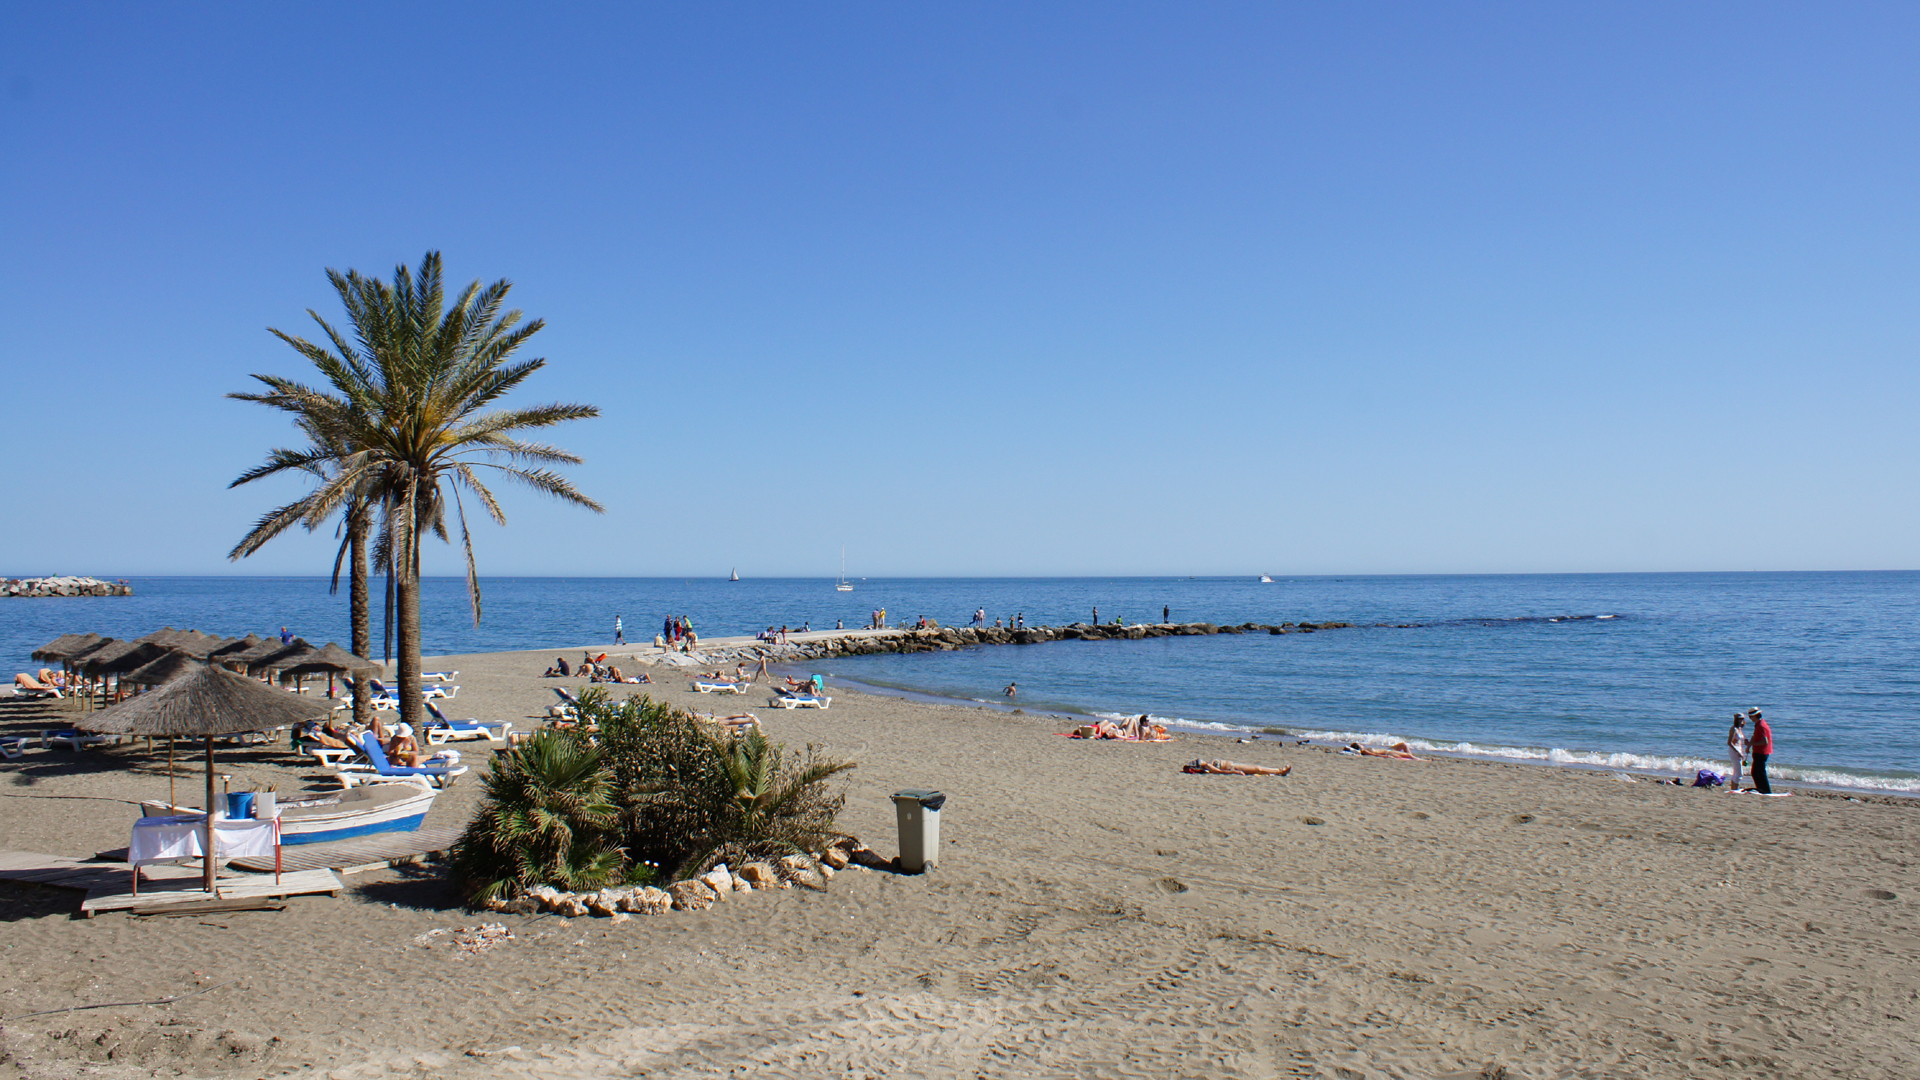 Fotostrecke Mein Europa 21: Strand in Marbella